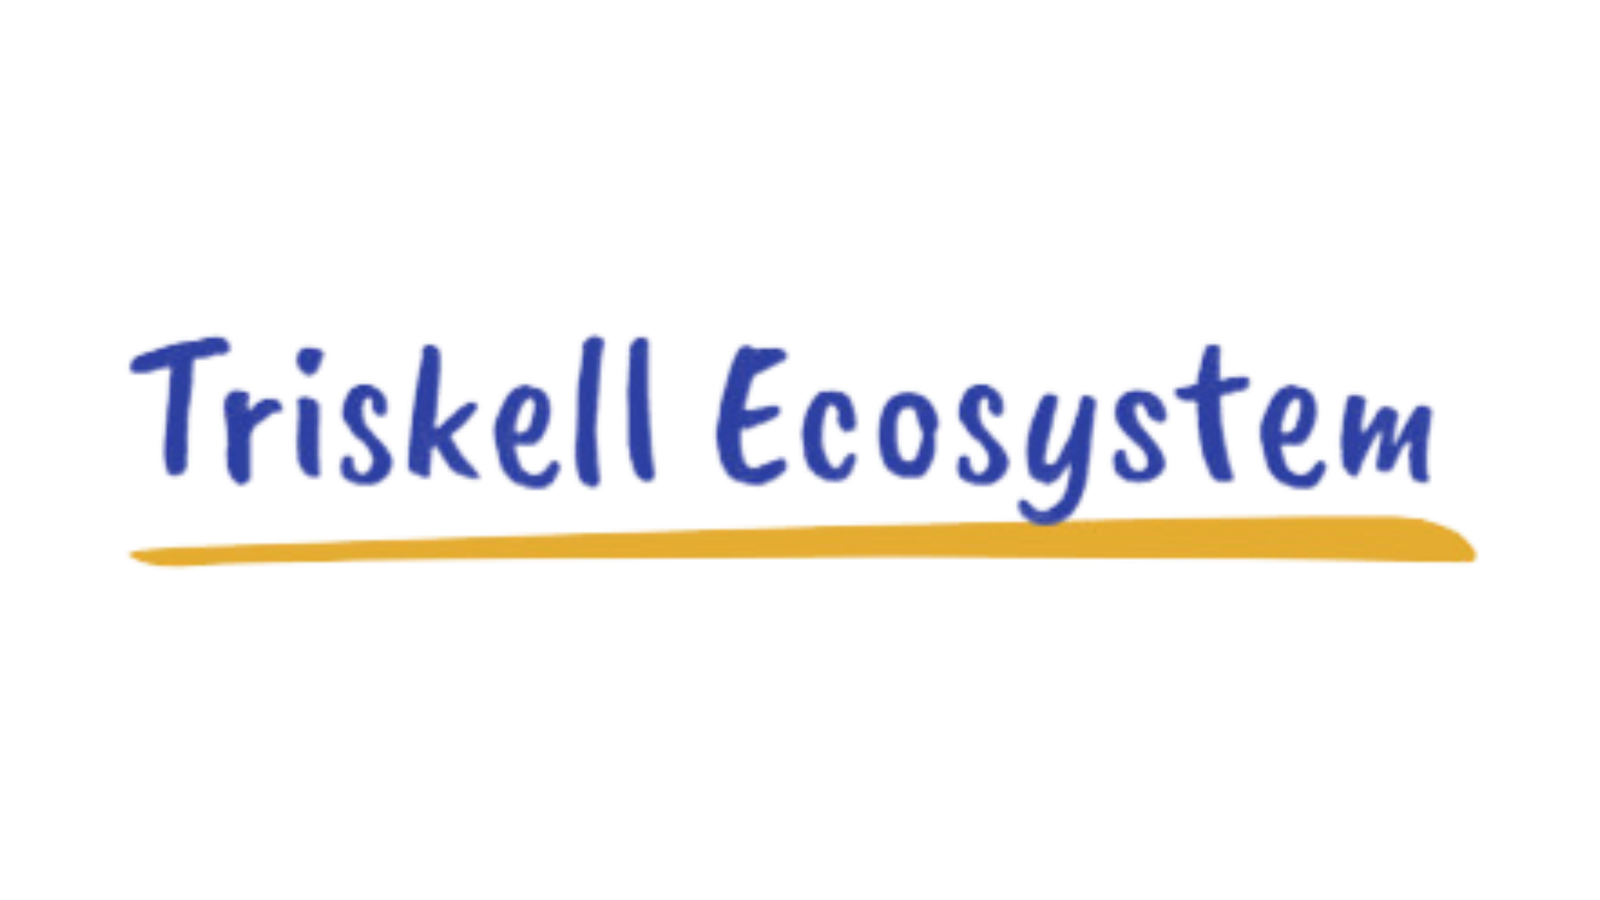 Triskell Ecosystem